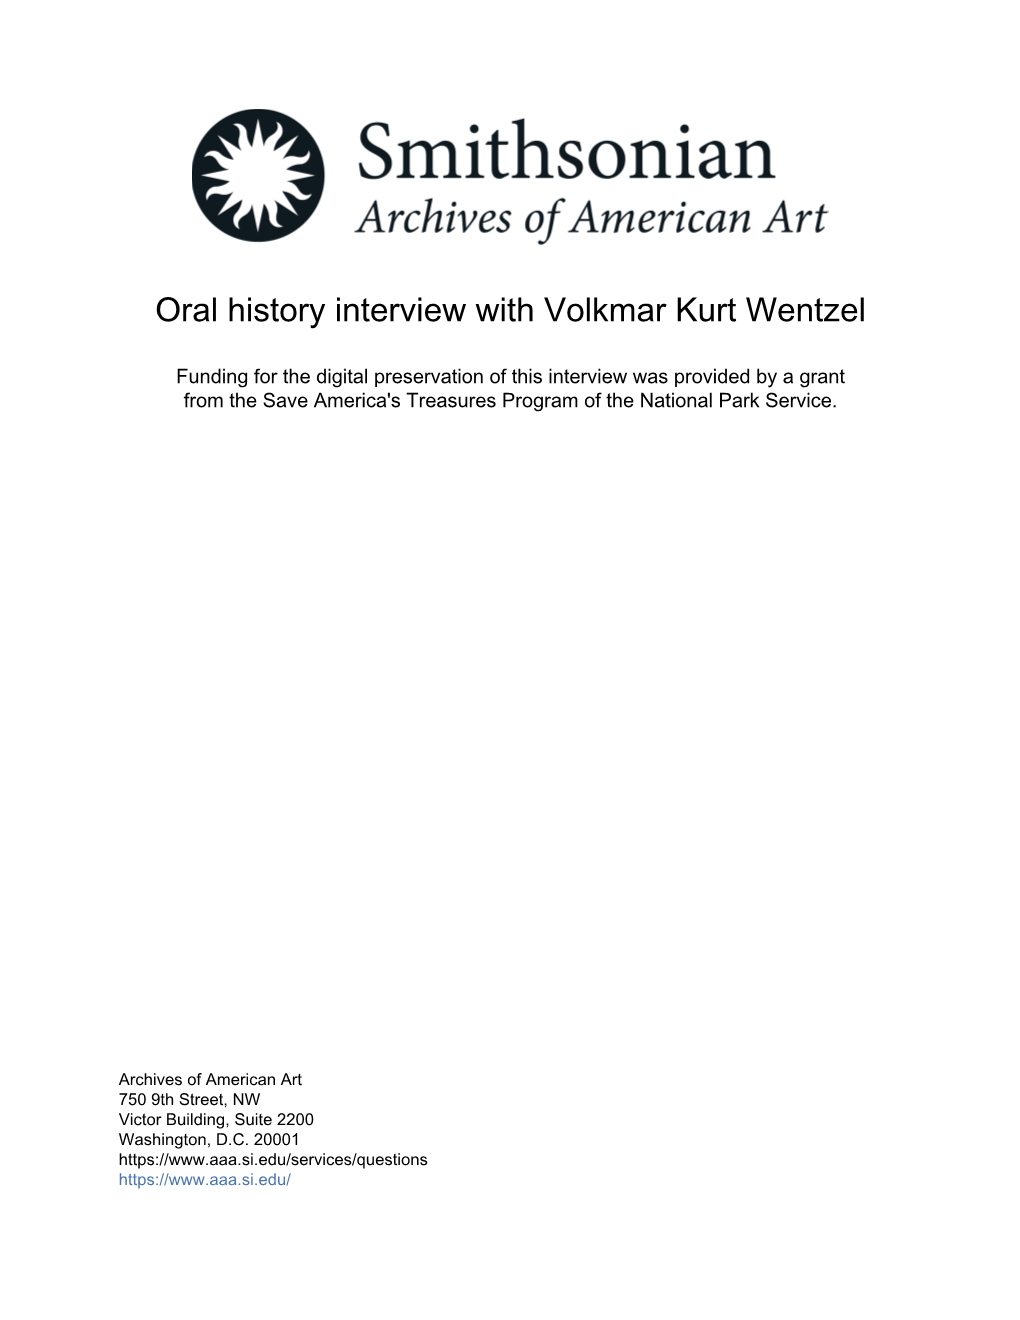 Oral History Interview with Volkmar Kurt Wentzel